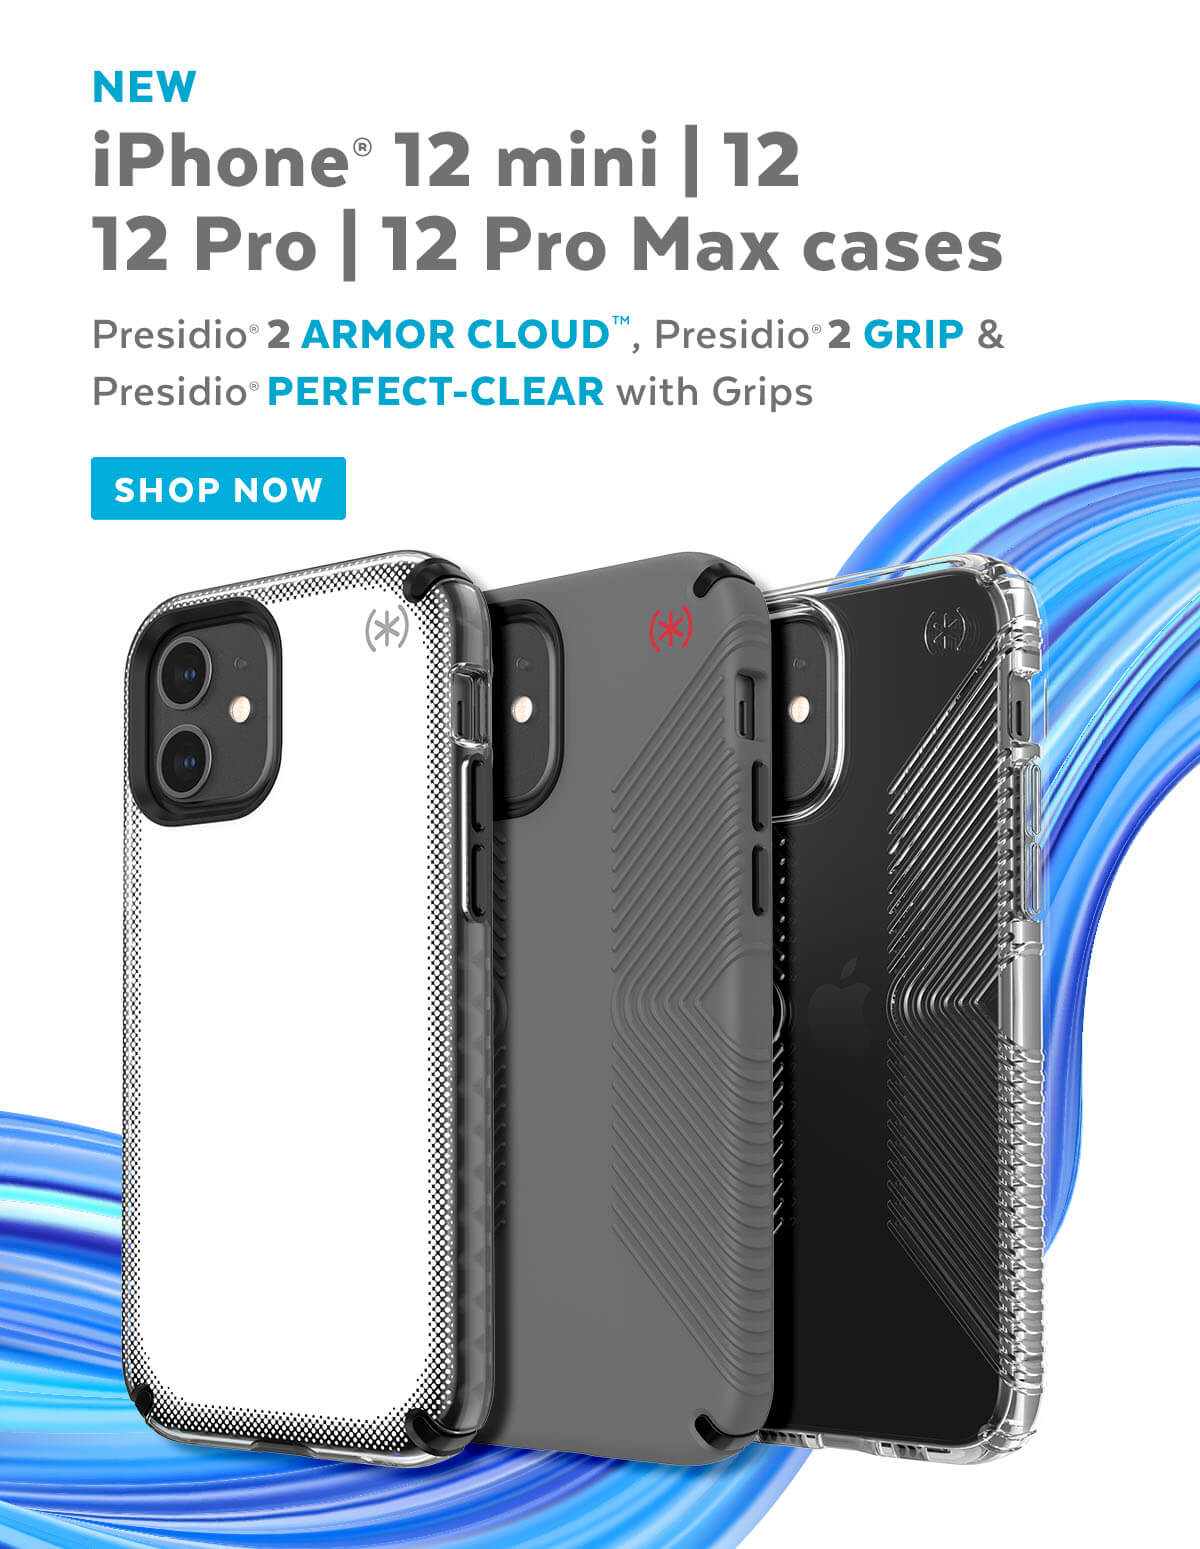 New iPhone 12 mini, 12, 12 Pro, 12 Pro Max cases. Shop now.